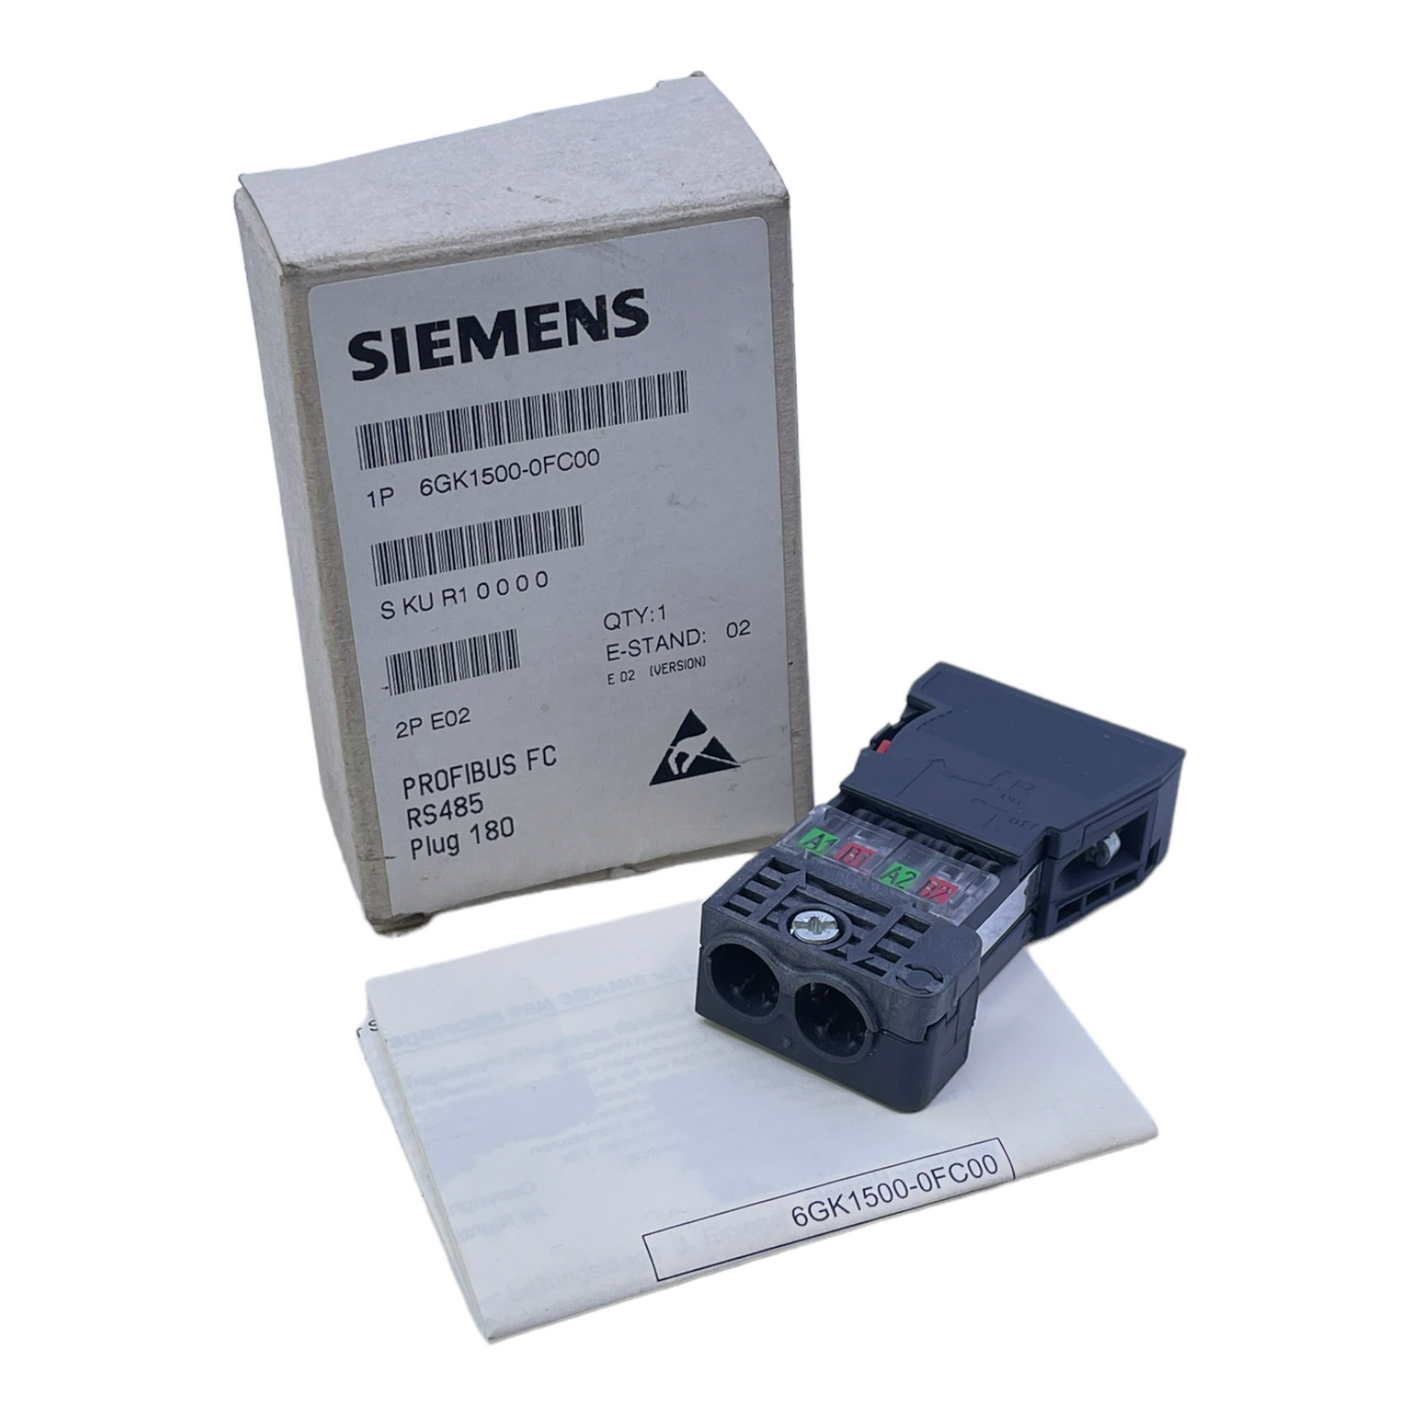 Siemens 6GK1500-0FC00 Profibus connector 